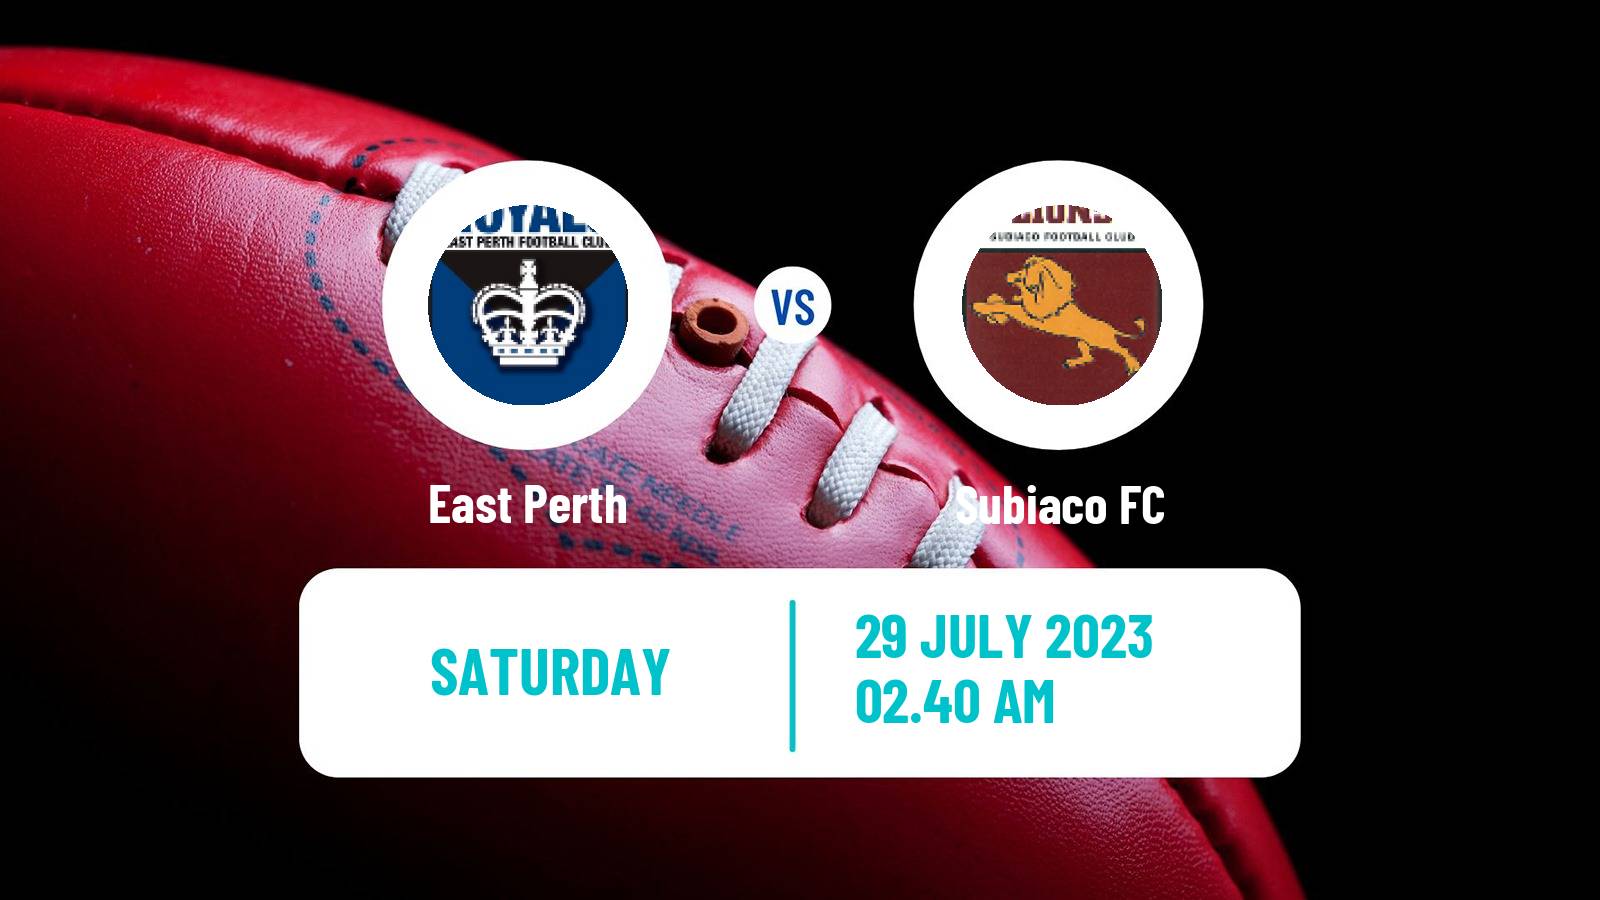 Aussie rules WAFL East Perth - Subiaco